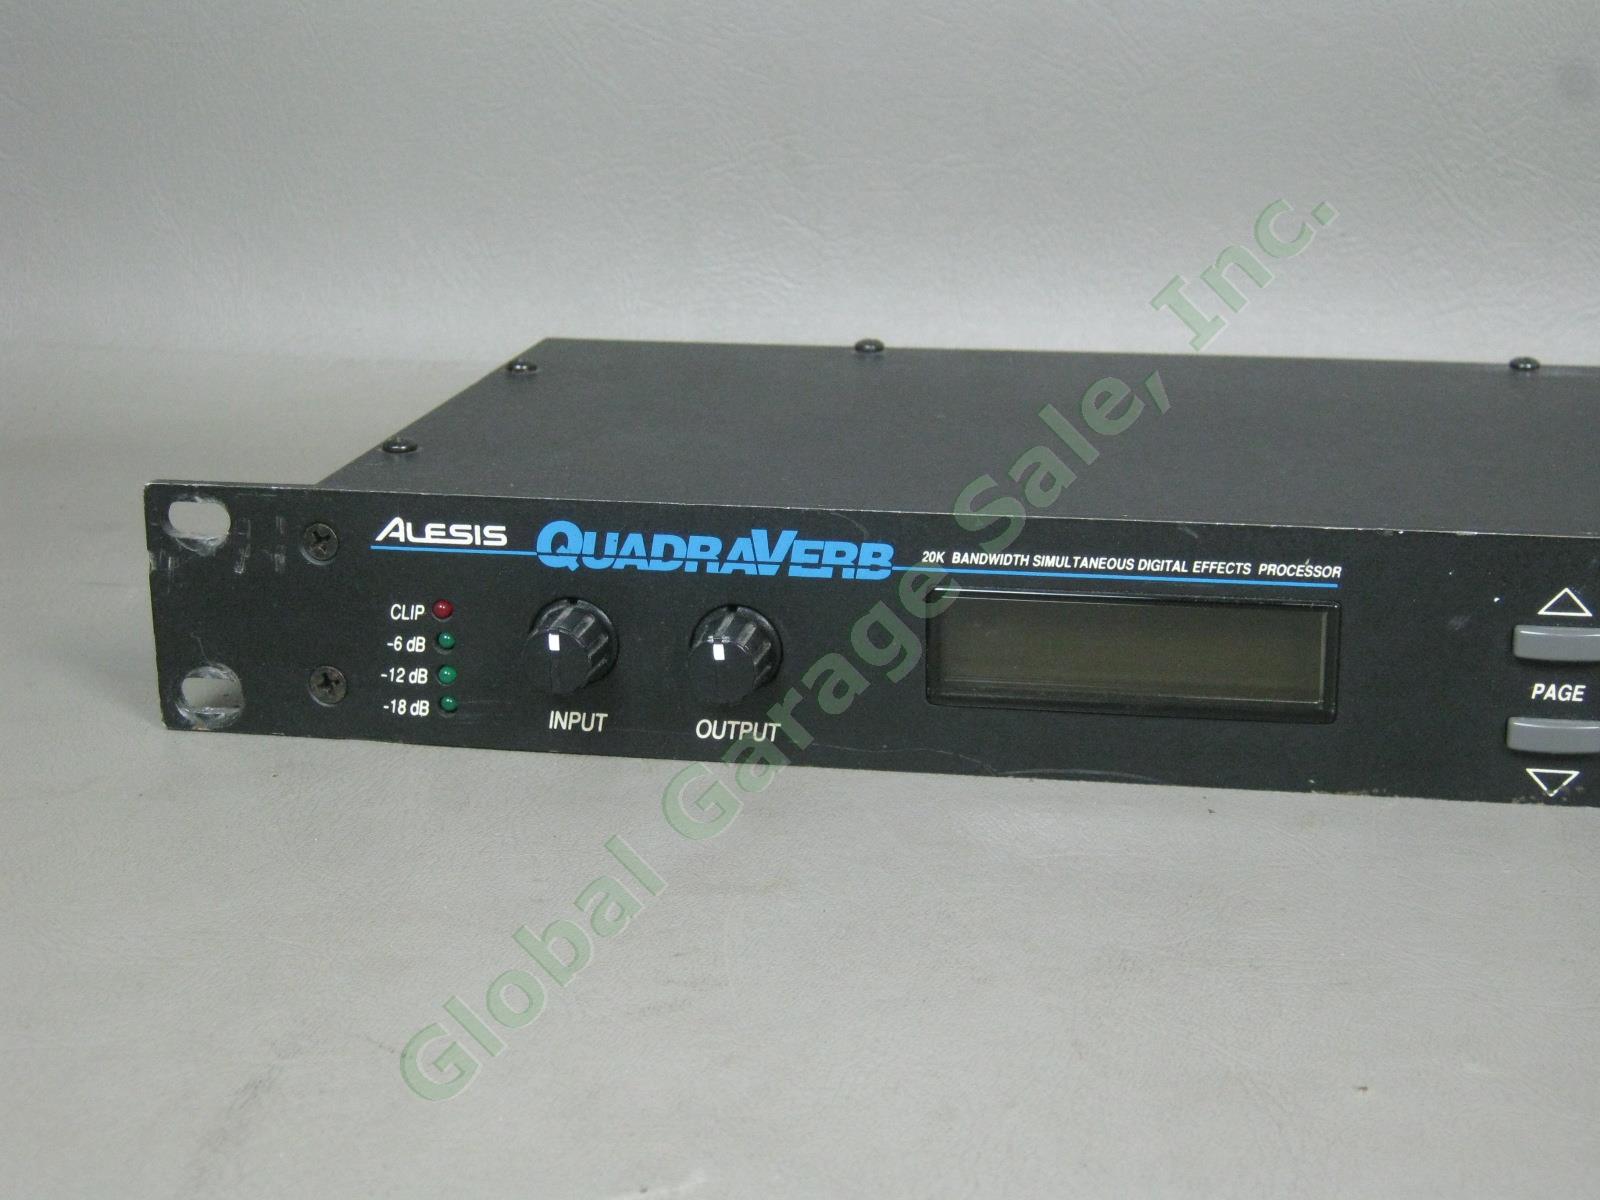 Alesis Quardaverb Plus Rack Mount Digital Effects Processor +Manual Power Supply 1